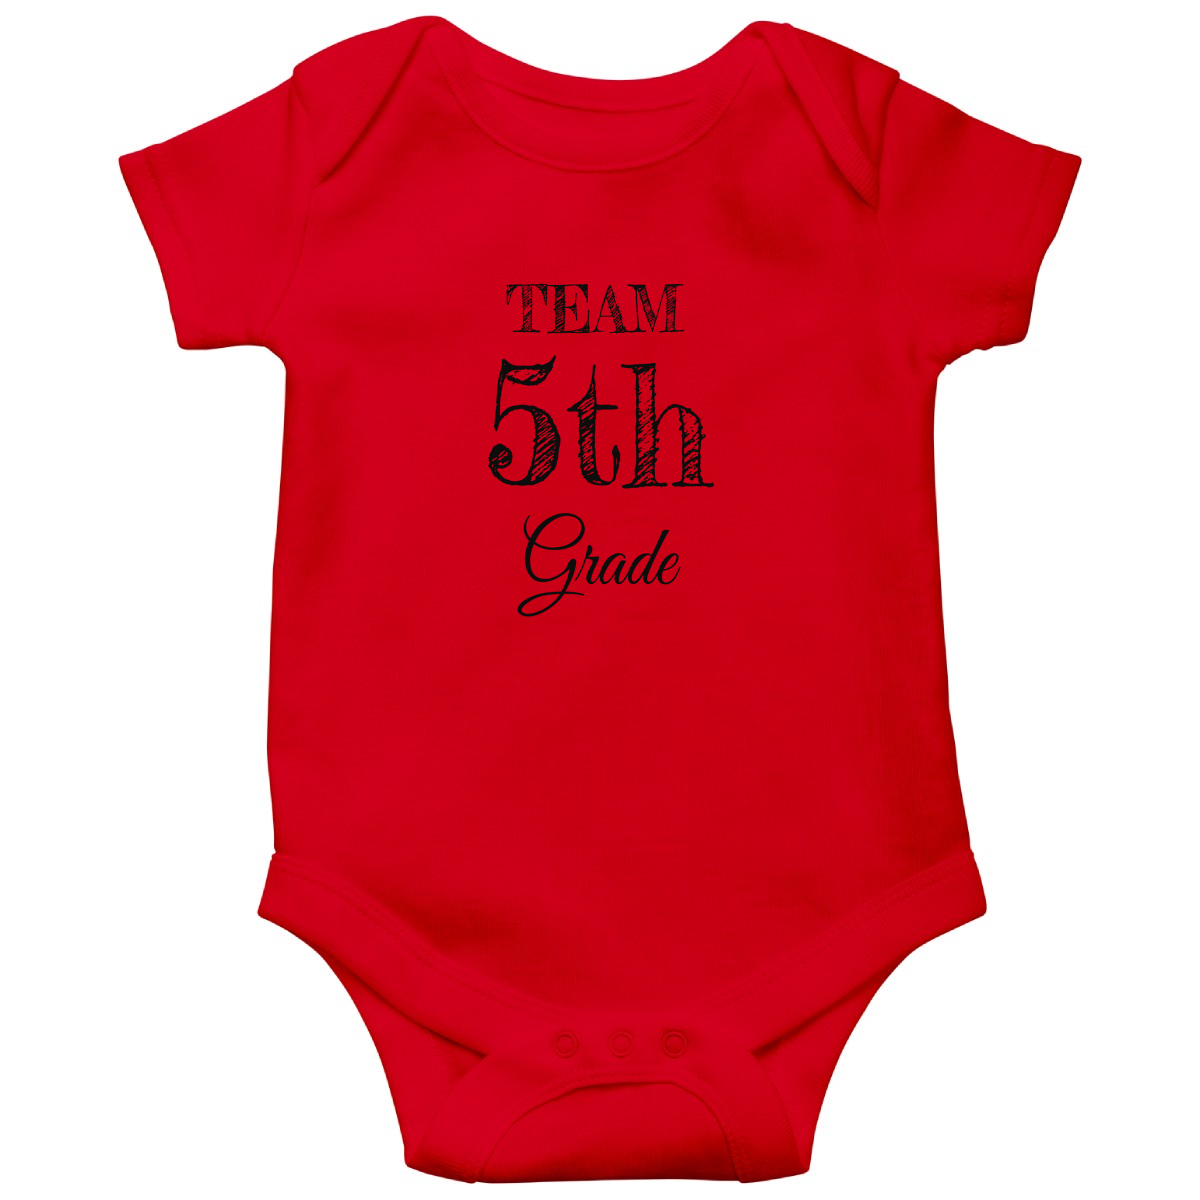 Team 5th Grade Baby Bodysuits